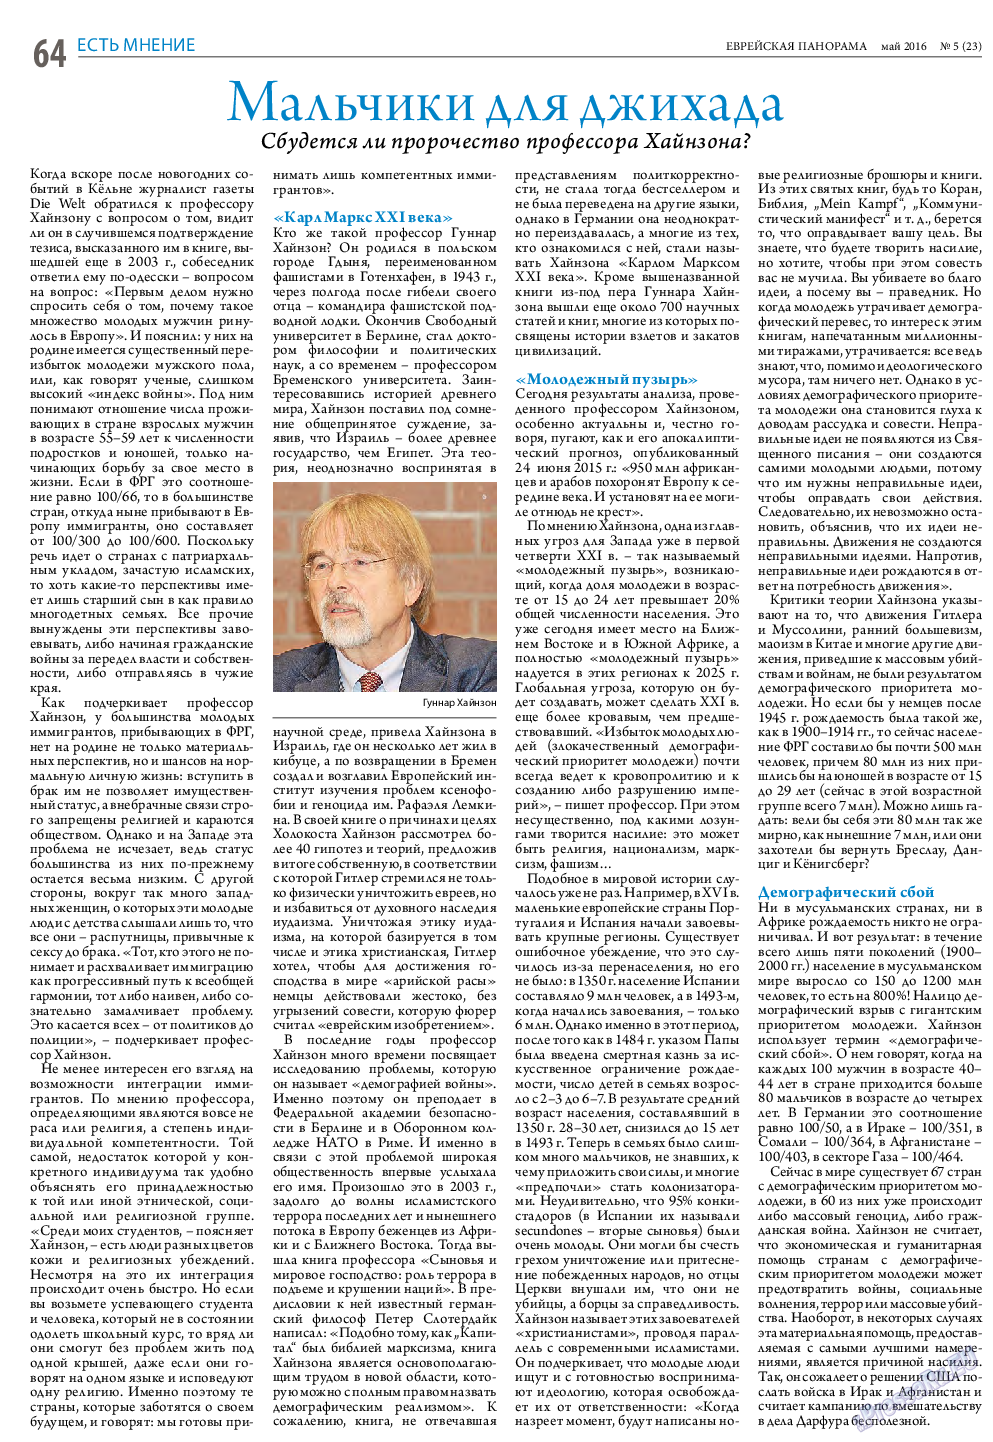 Еврейская панорама, газета. 2016 №5 стр.64